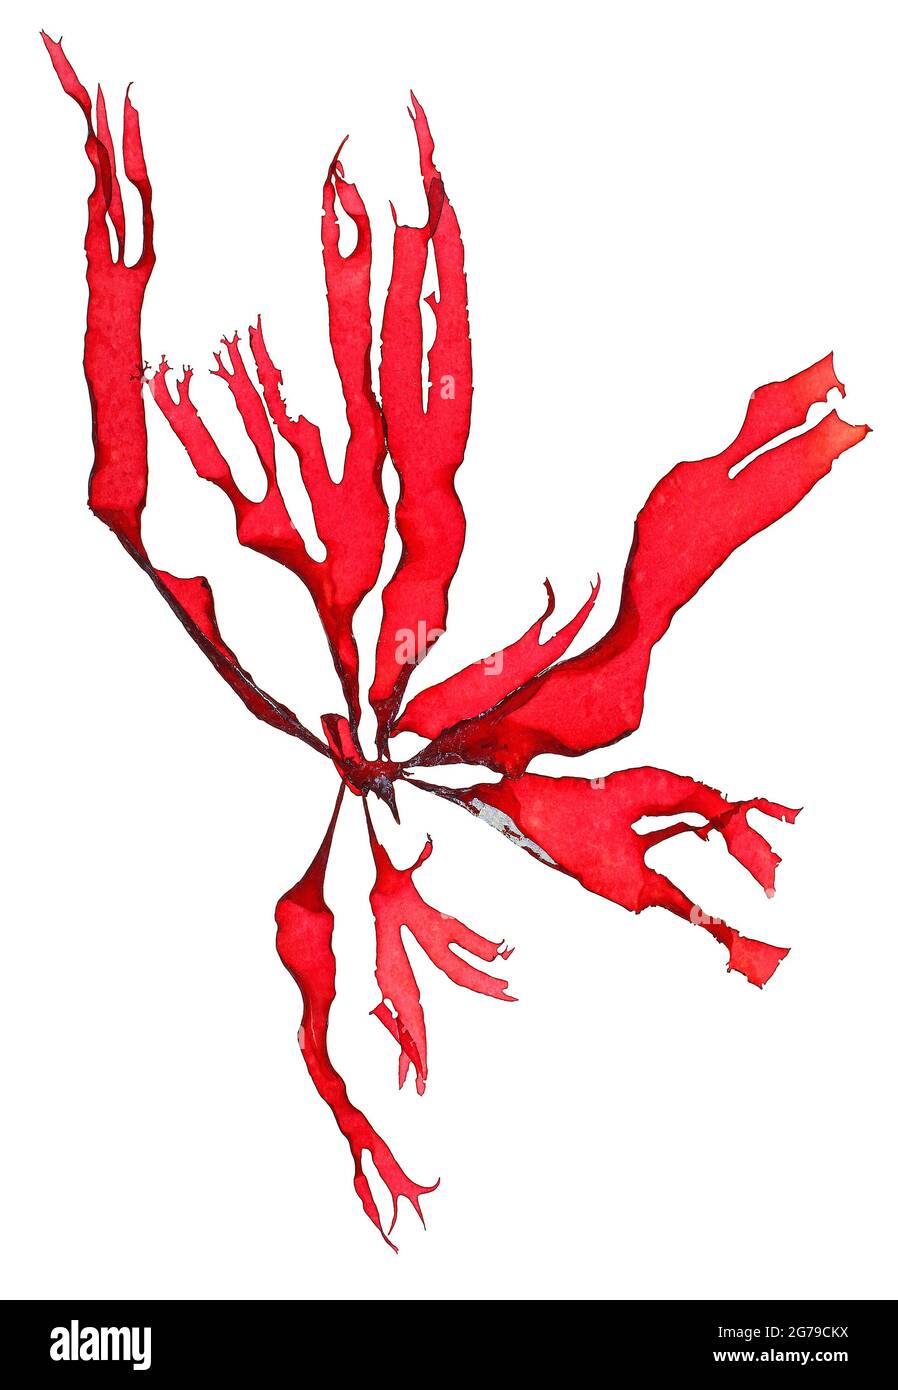 Itonoa marginifera (J. Agardh) Masuda & Guiry, red alga (Florideophyceae) Stock Photo